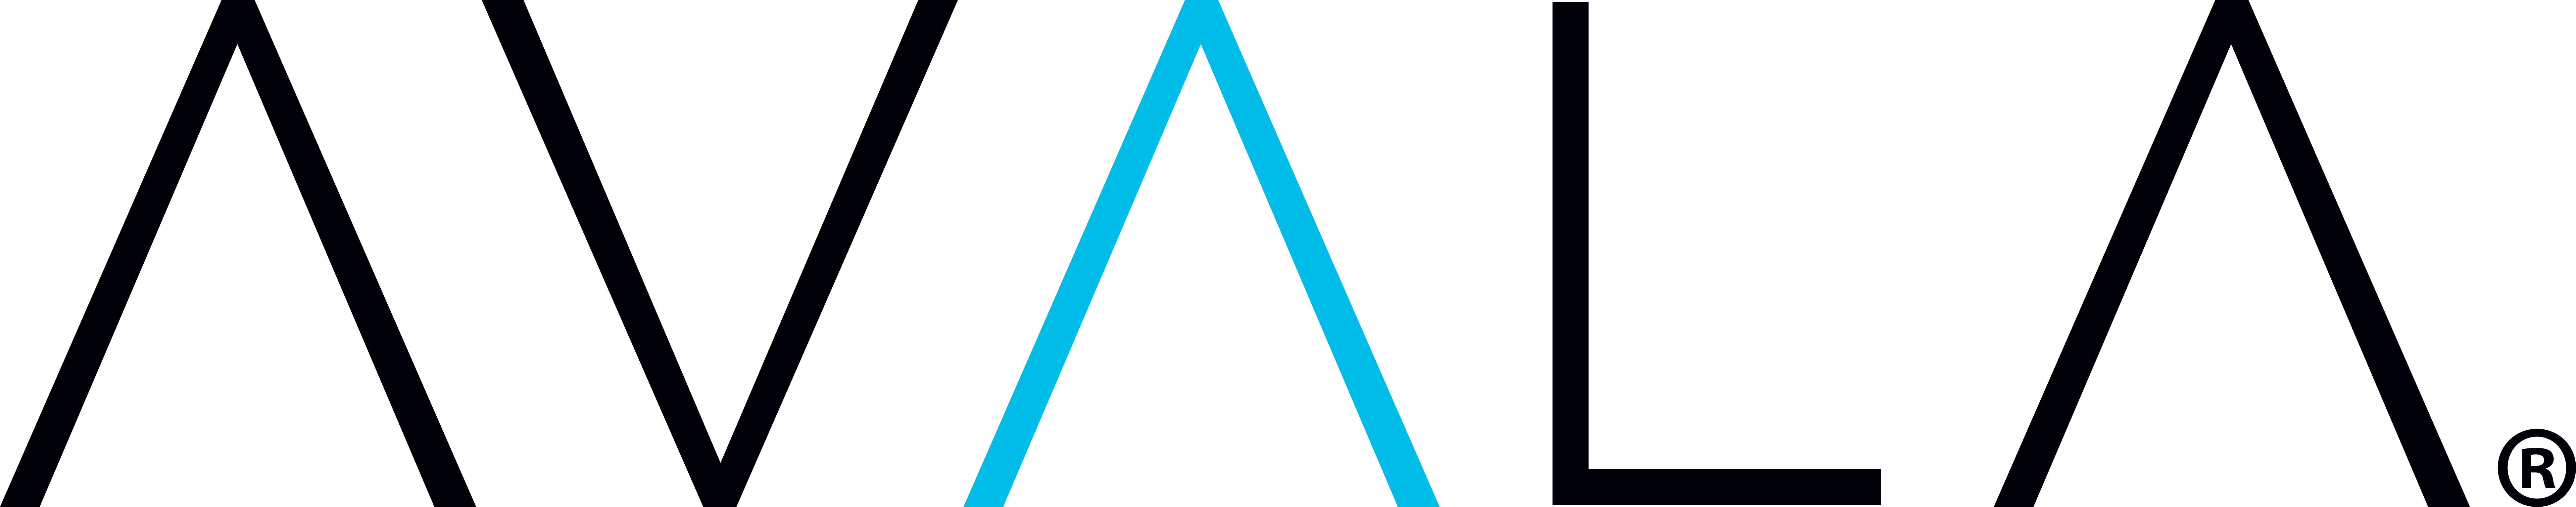 AVALA logo